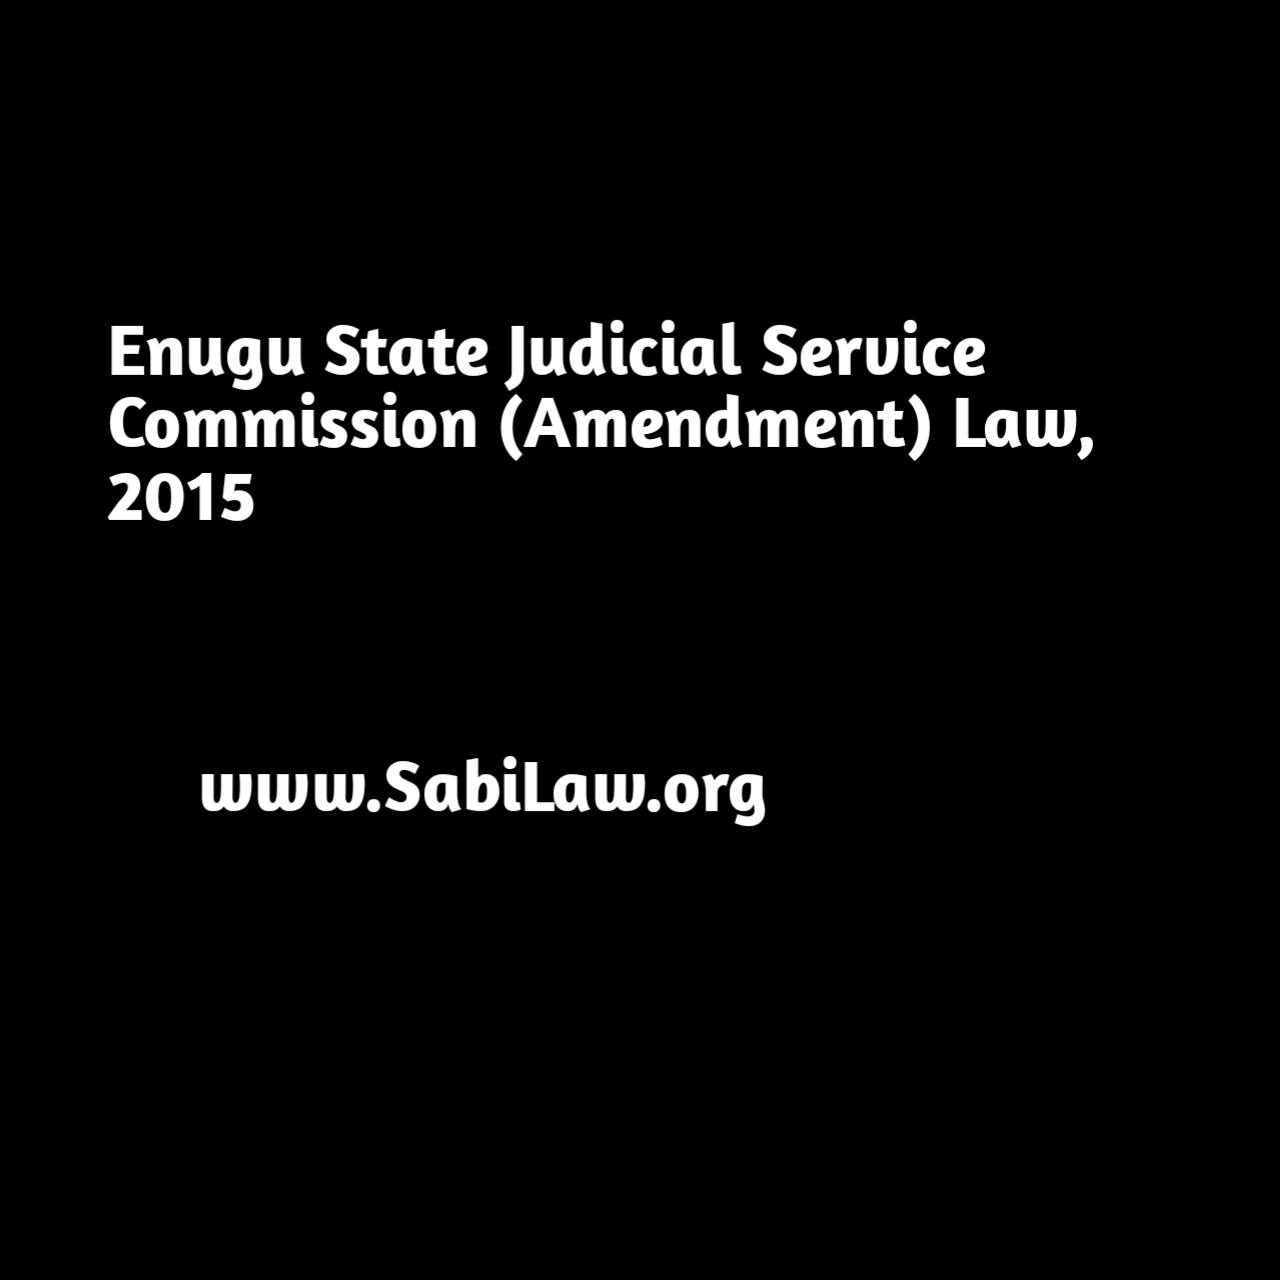 Enugu State Judicial Service Commission (Amendment) Law, 2015